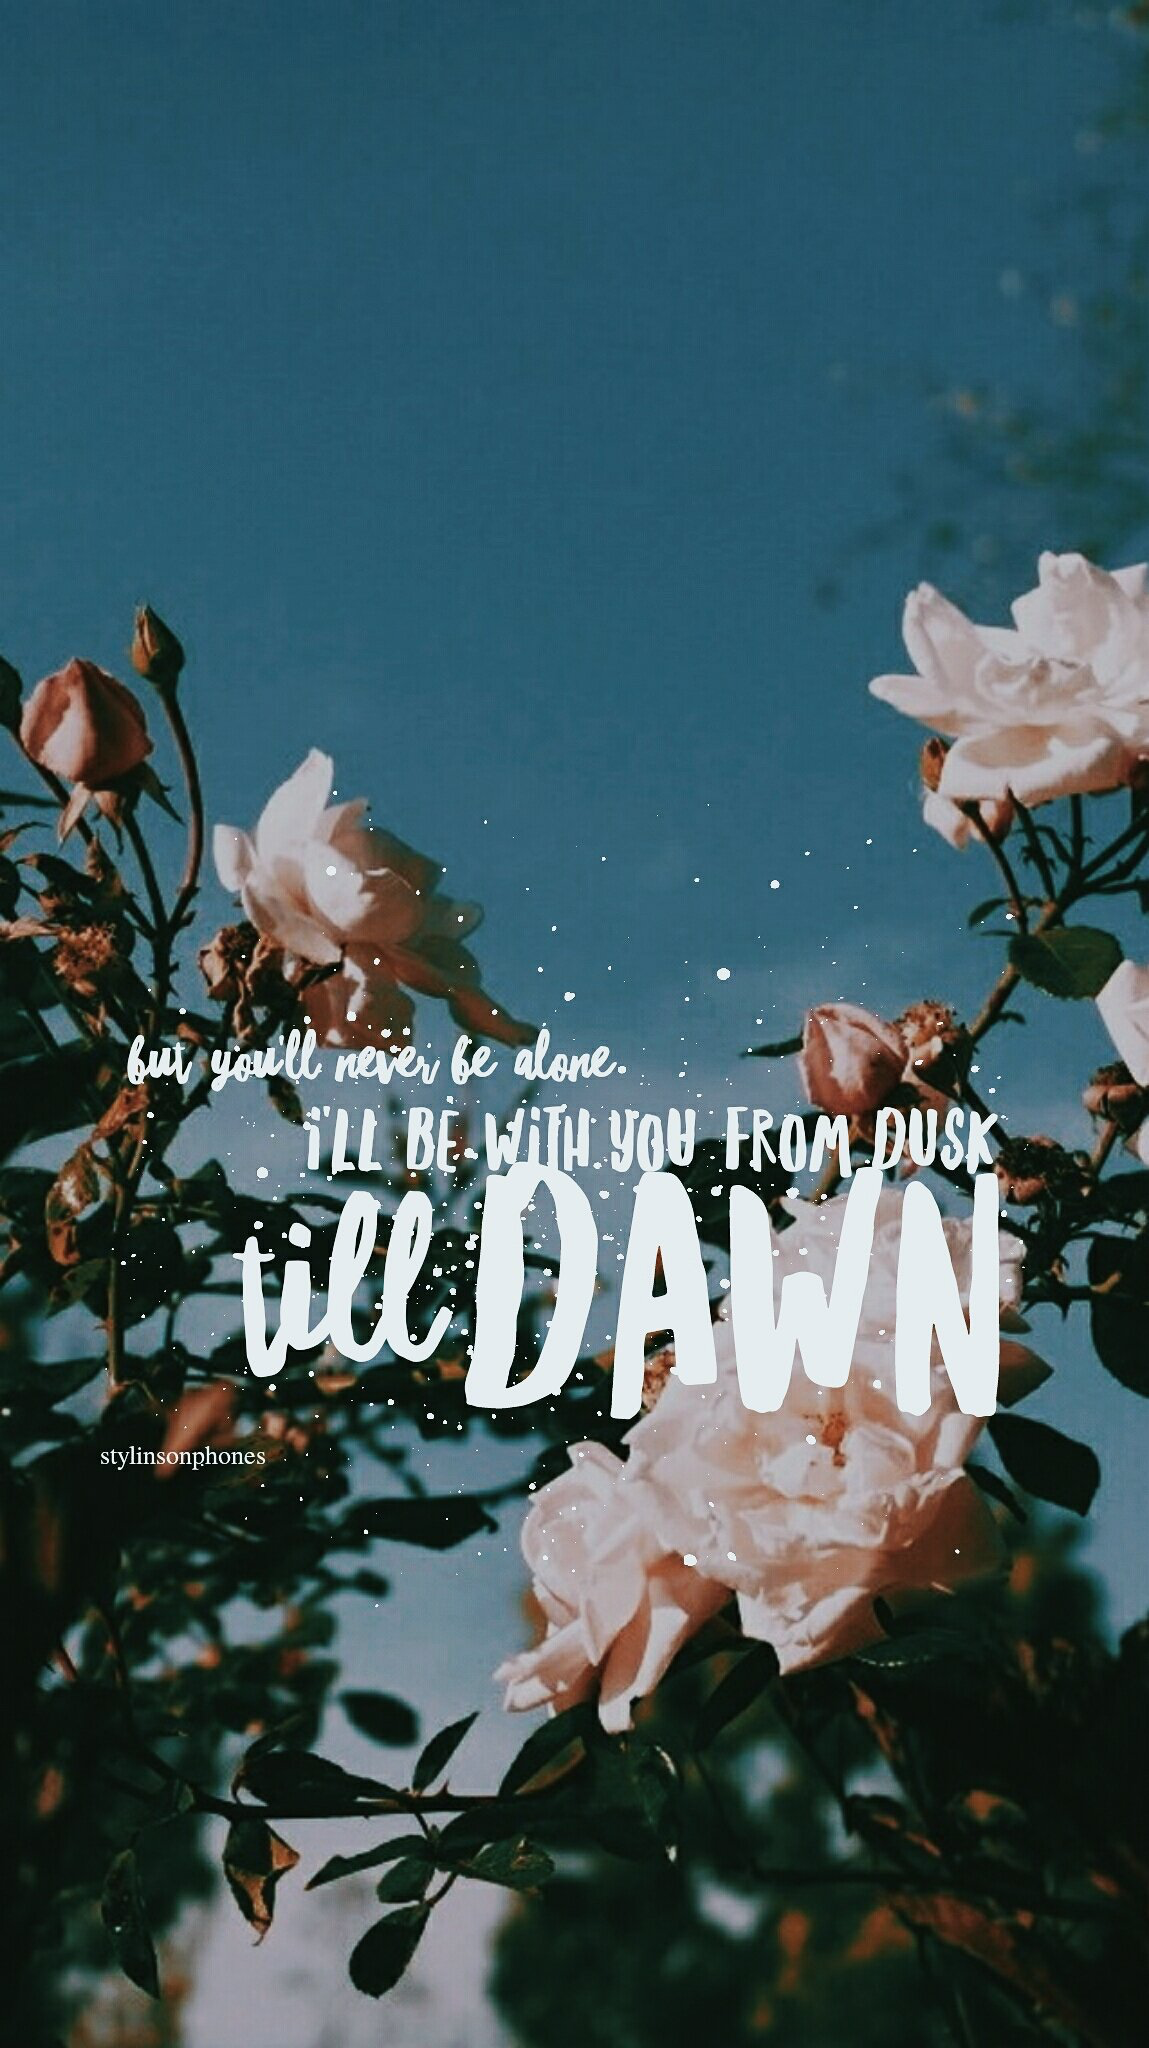 Dusk till dawn. Wallpaper iphone quotes songs, Song lyrics